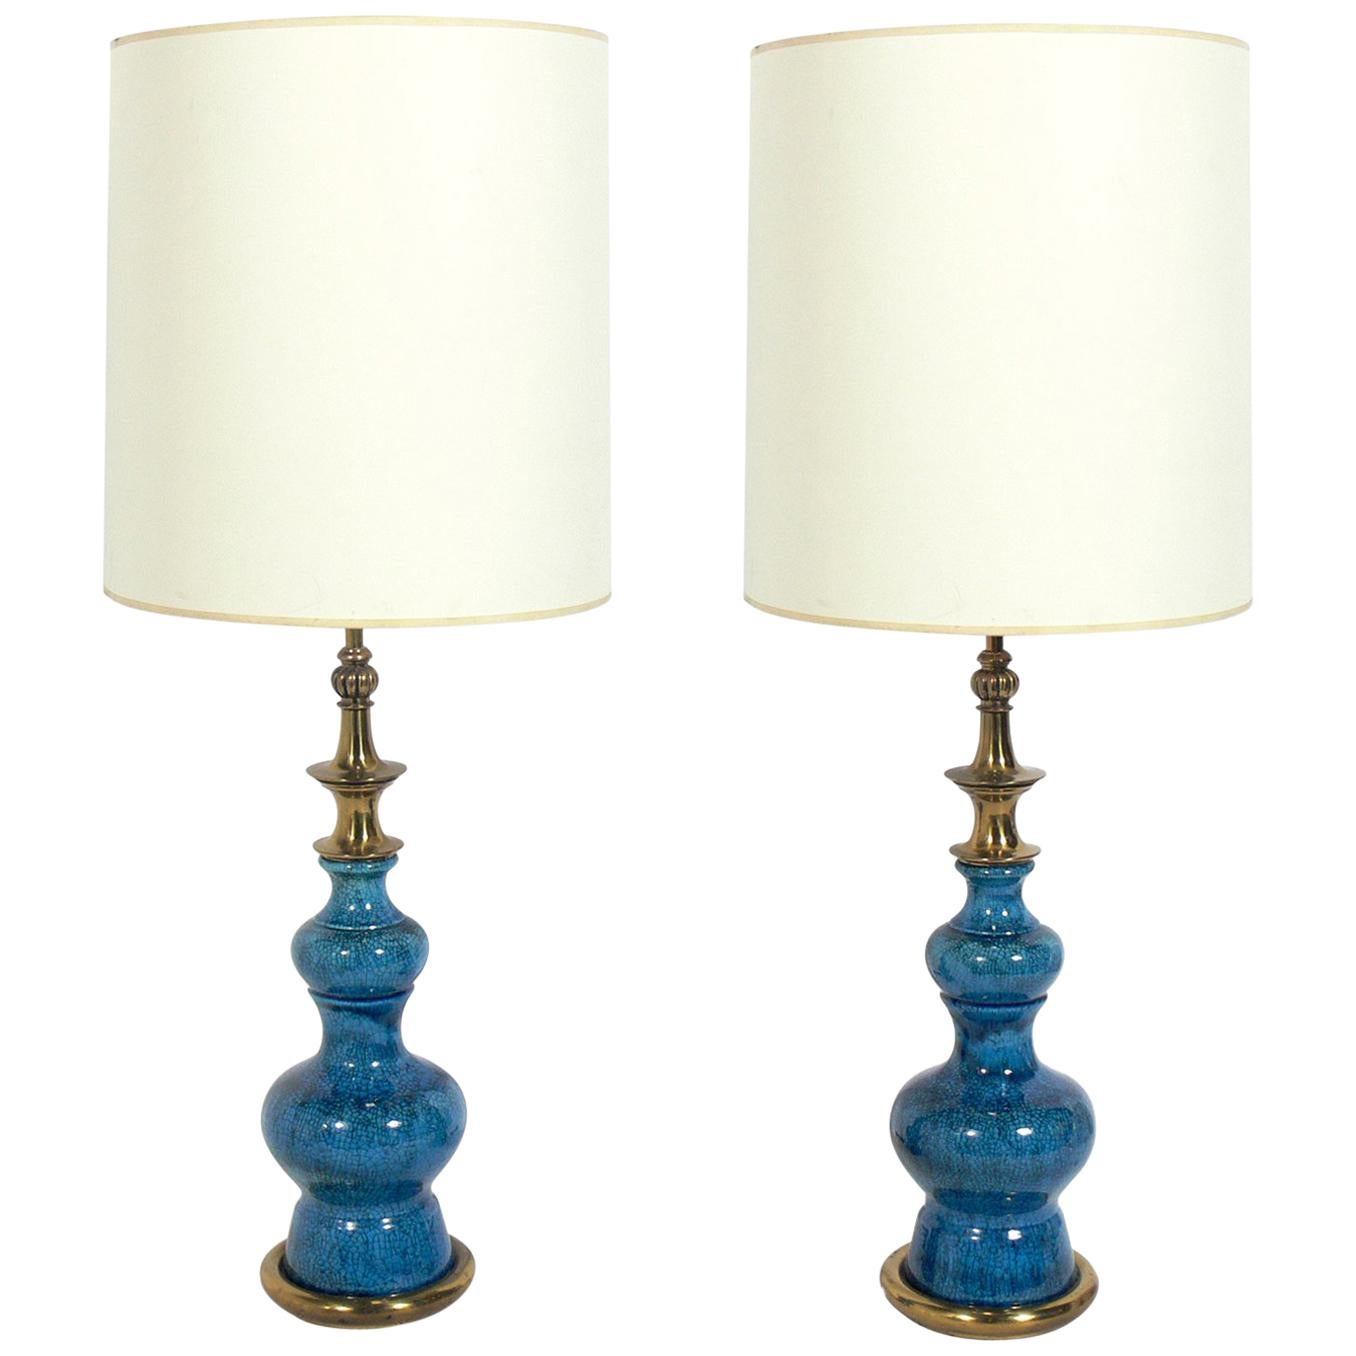 Pair of Vibrant Blue Ceramic Lamps by Stiffel